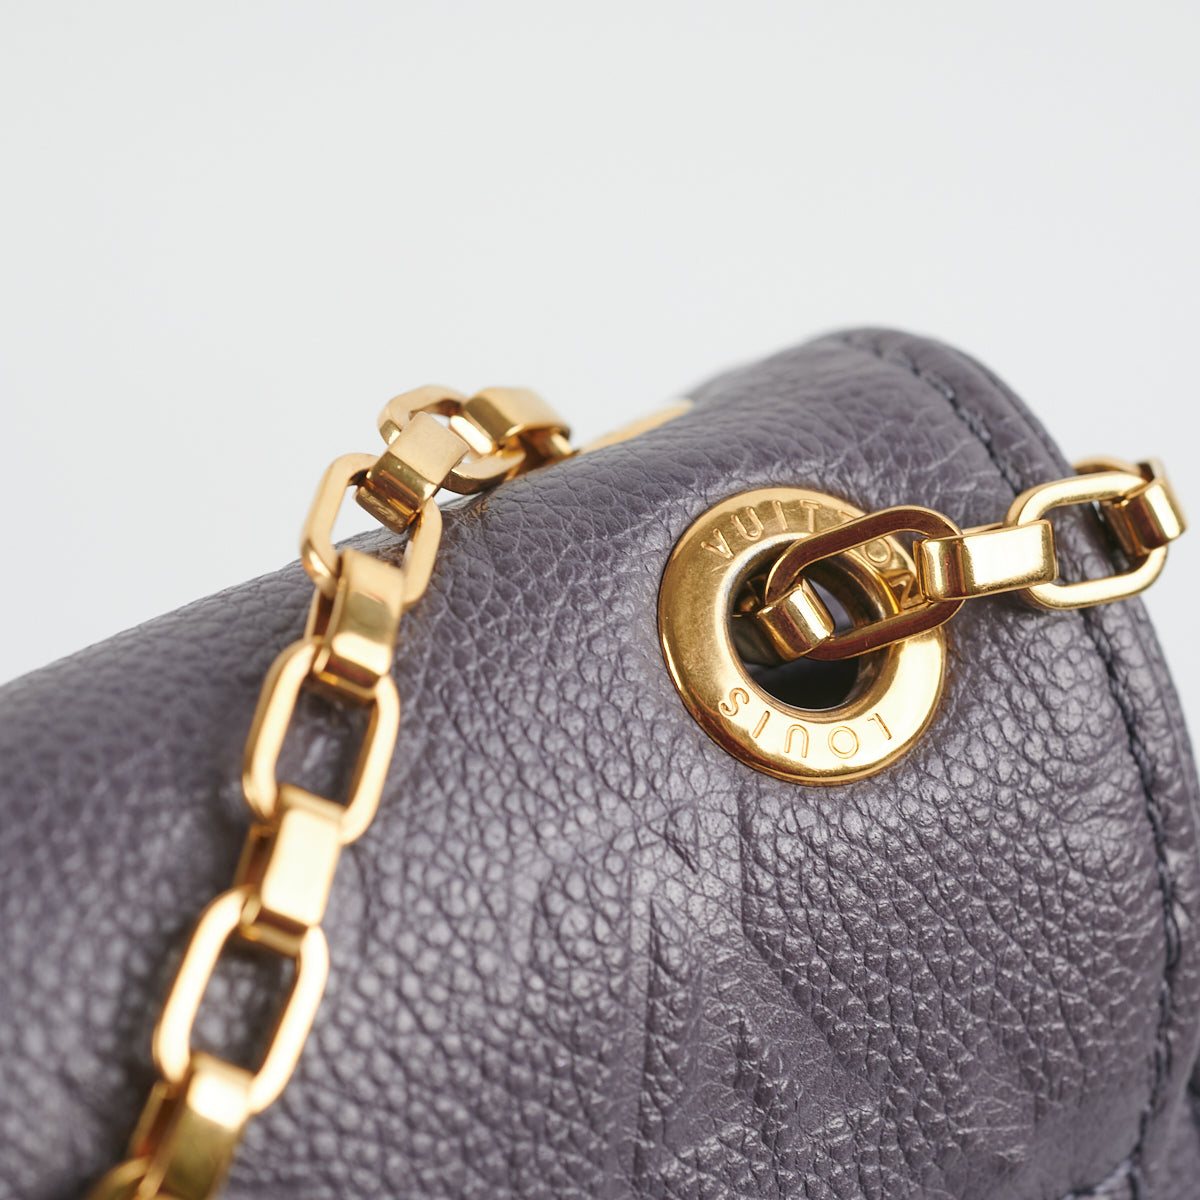 Louis Vuitton Saint Germain Handbag Studded Monogram Empreinte Leather Bb